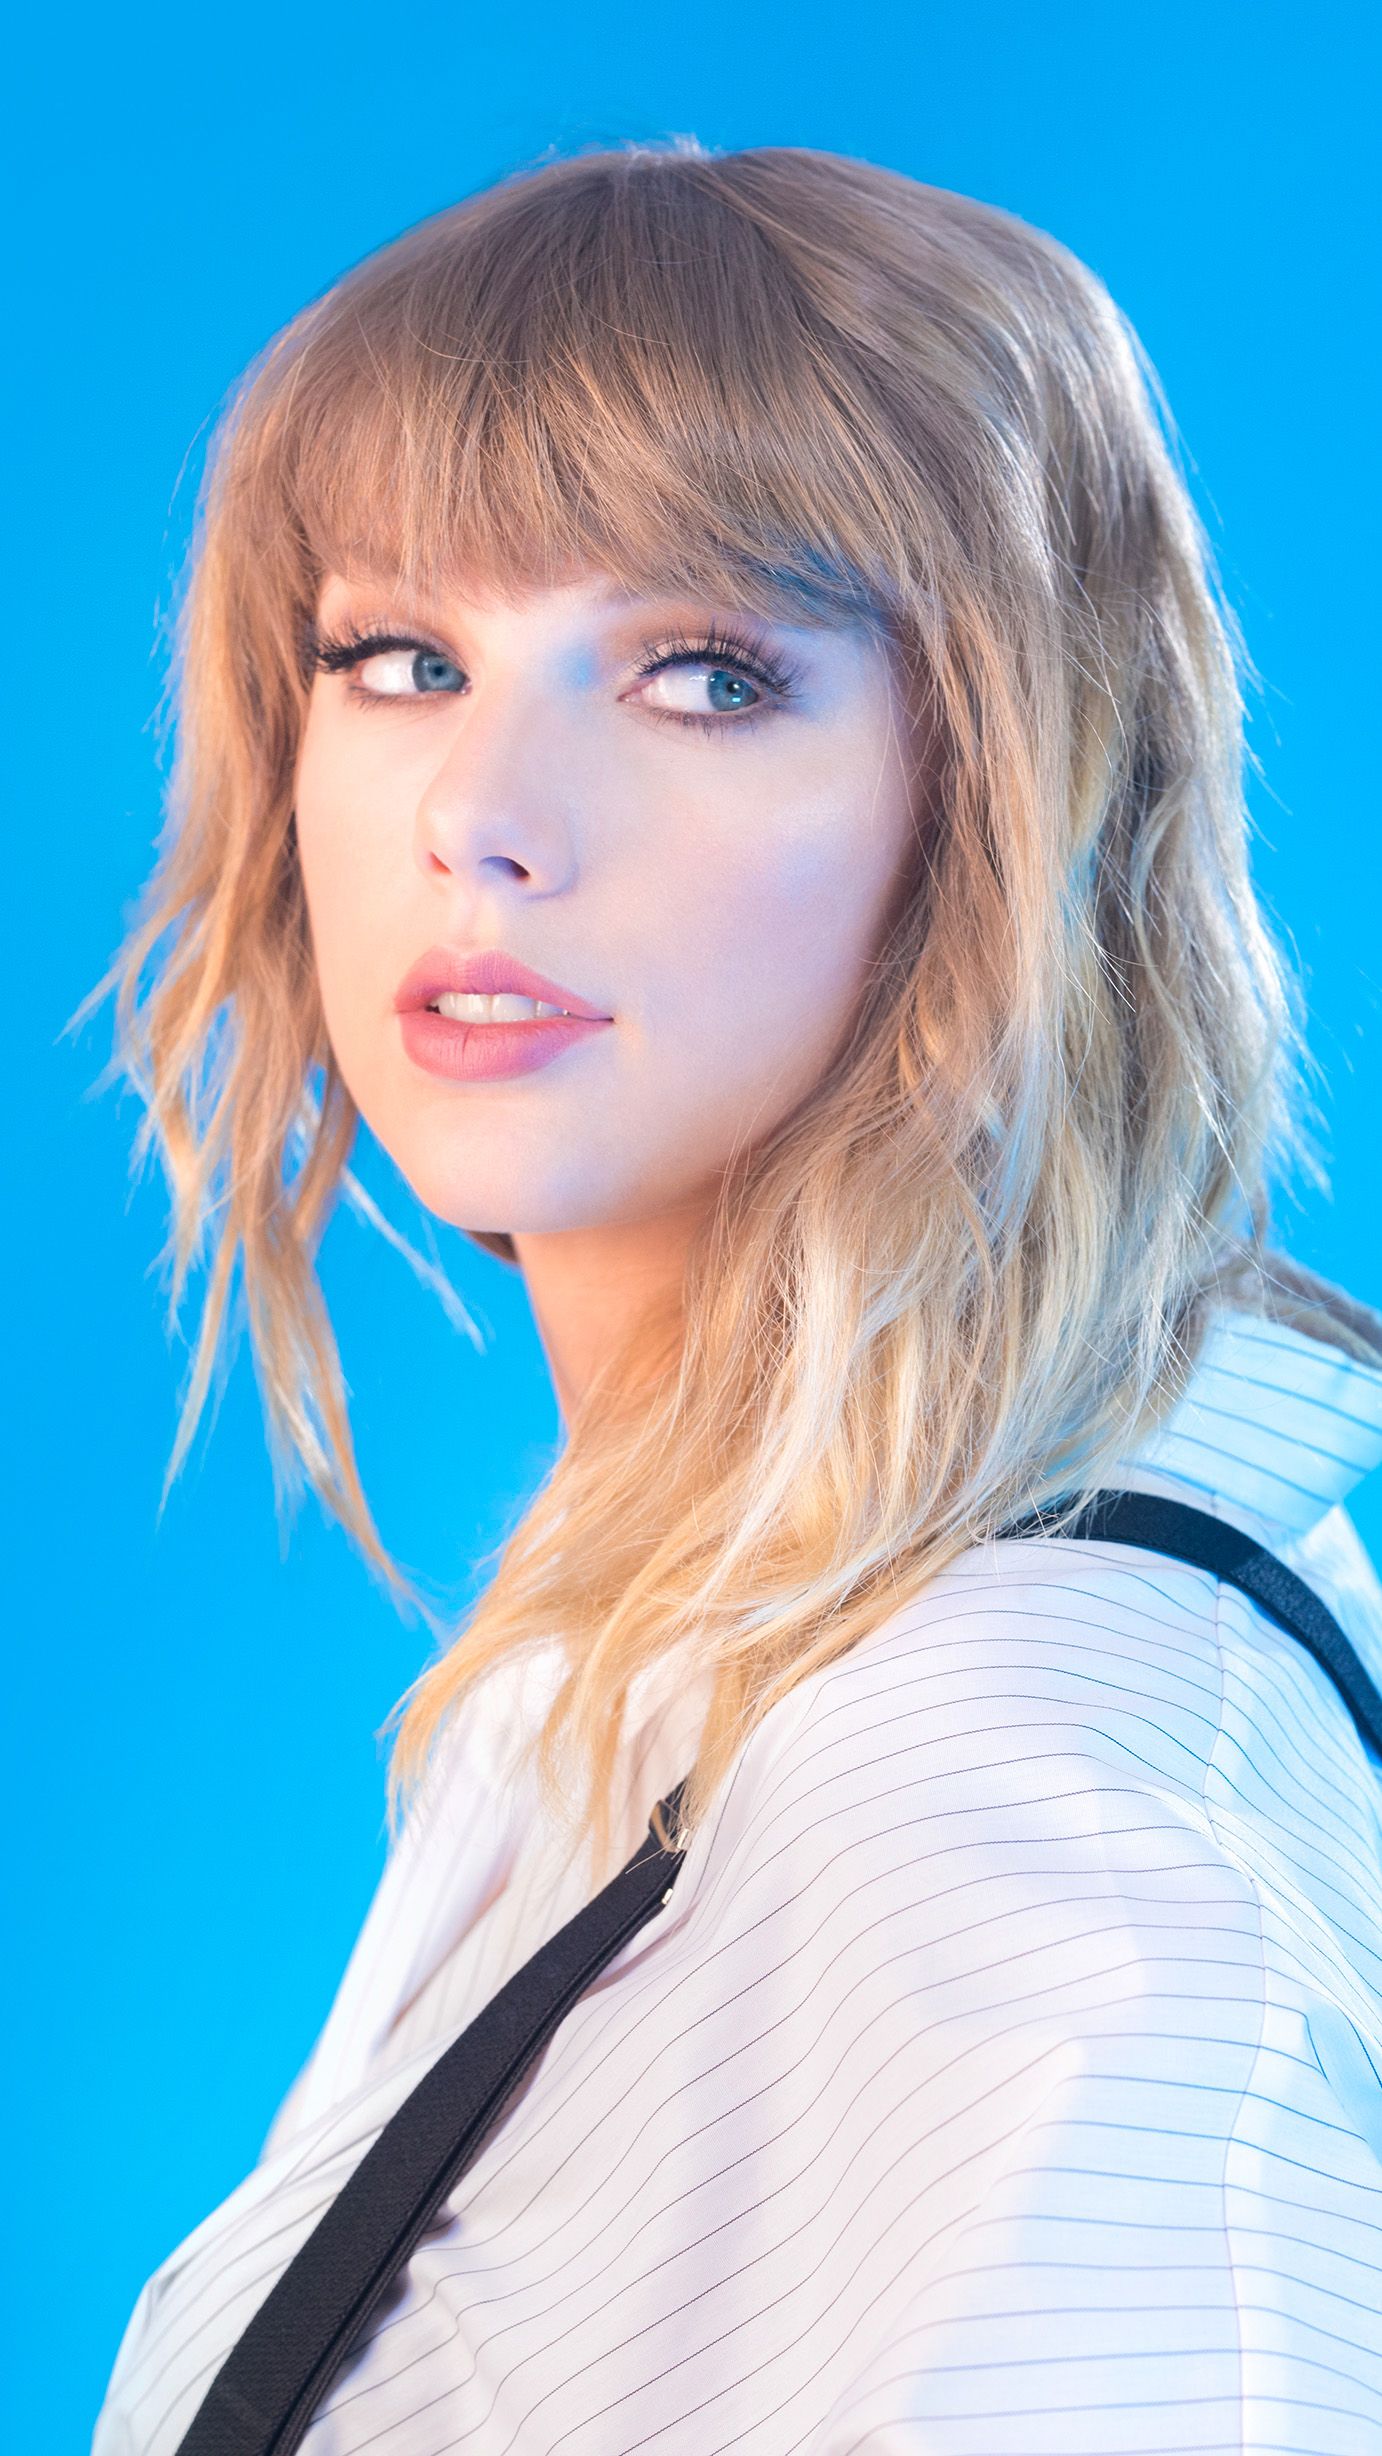 Wallpaper, Taylor Swift, singer, blonde, women 1382x2456